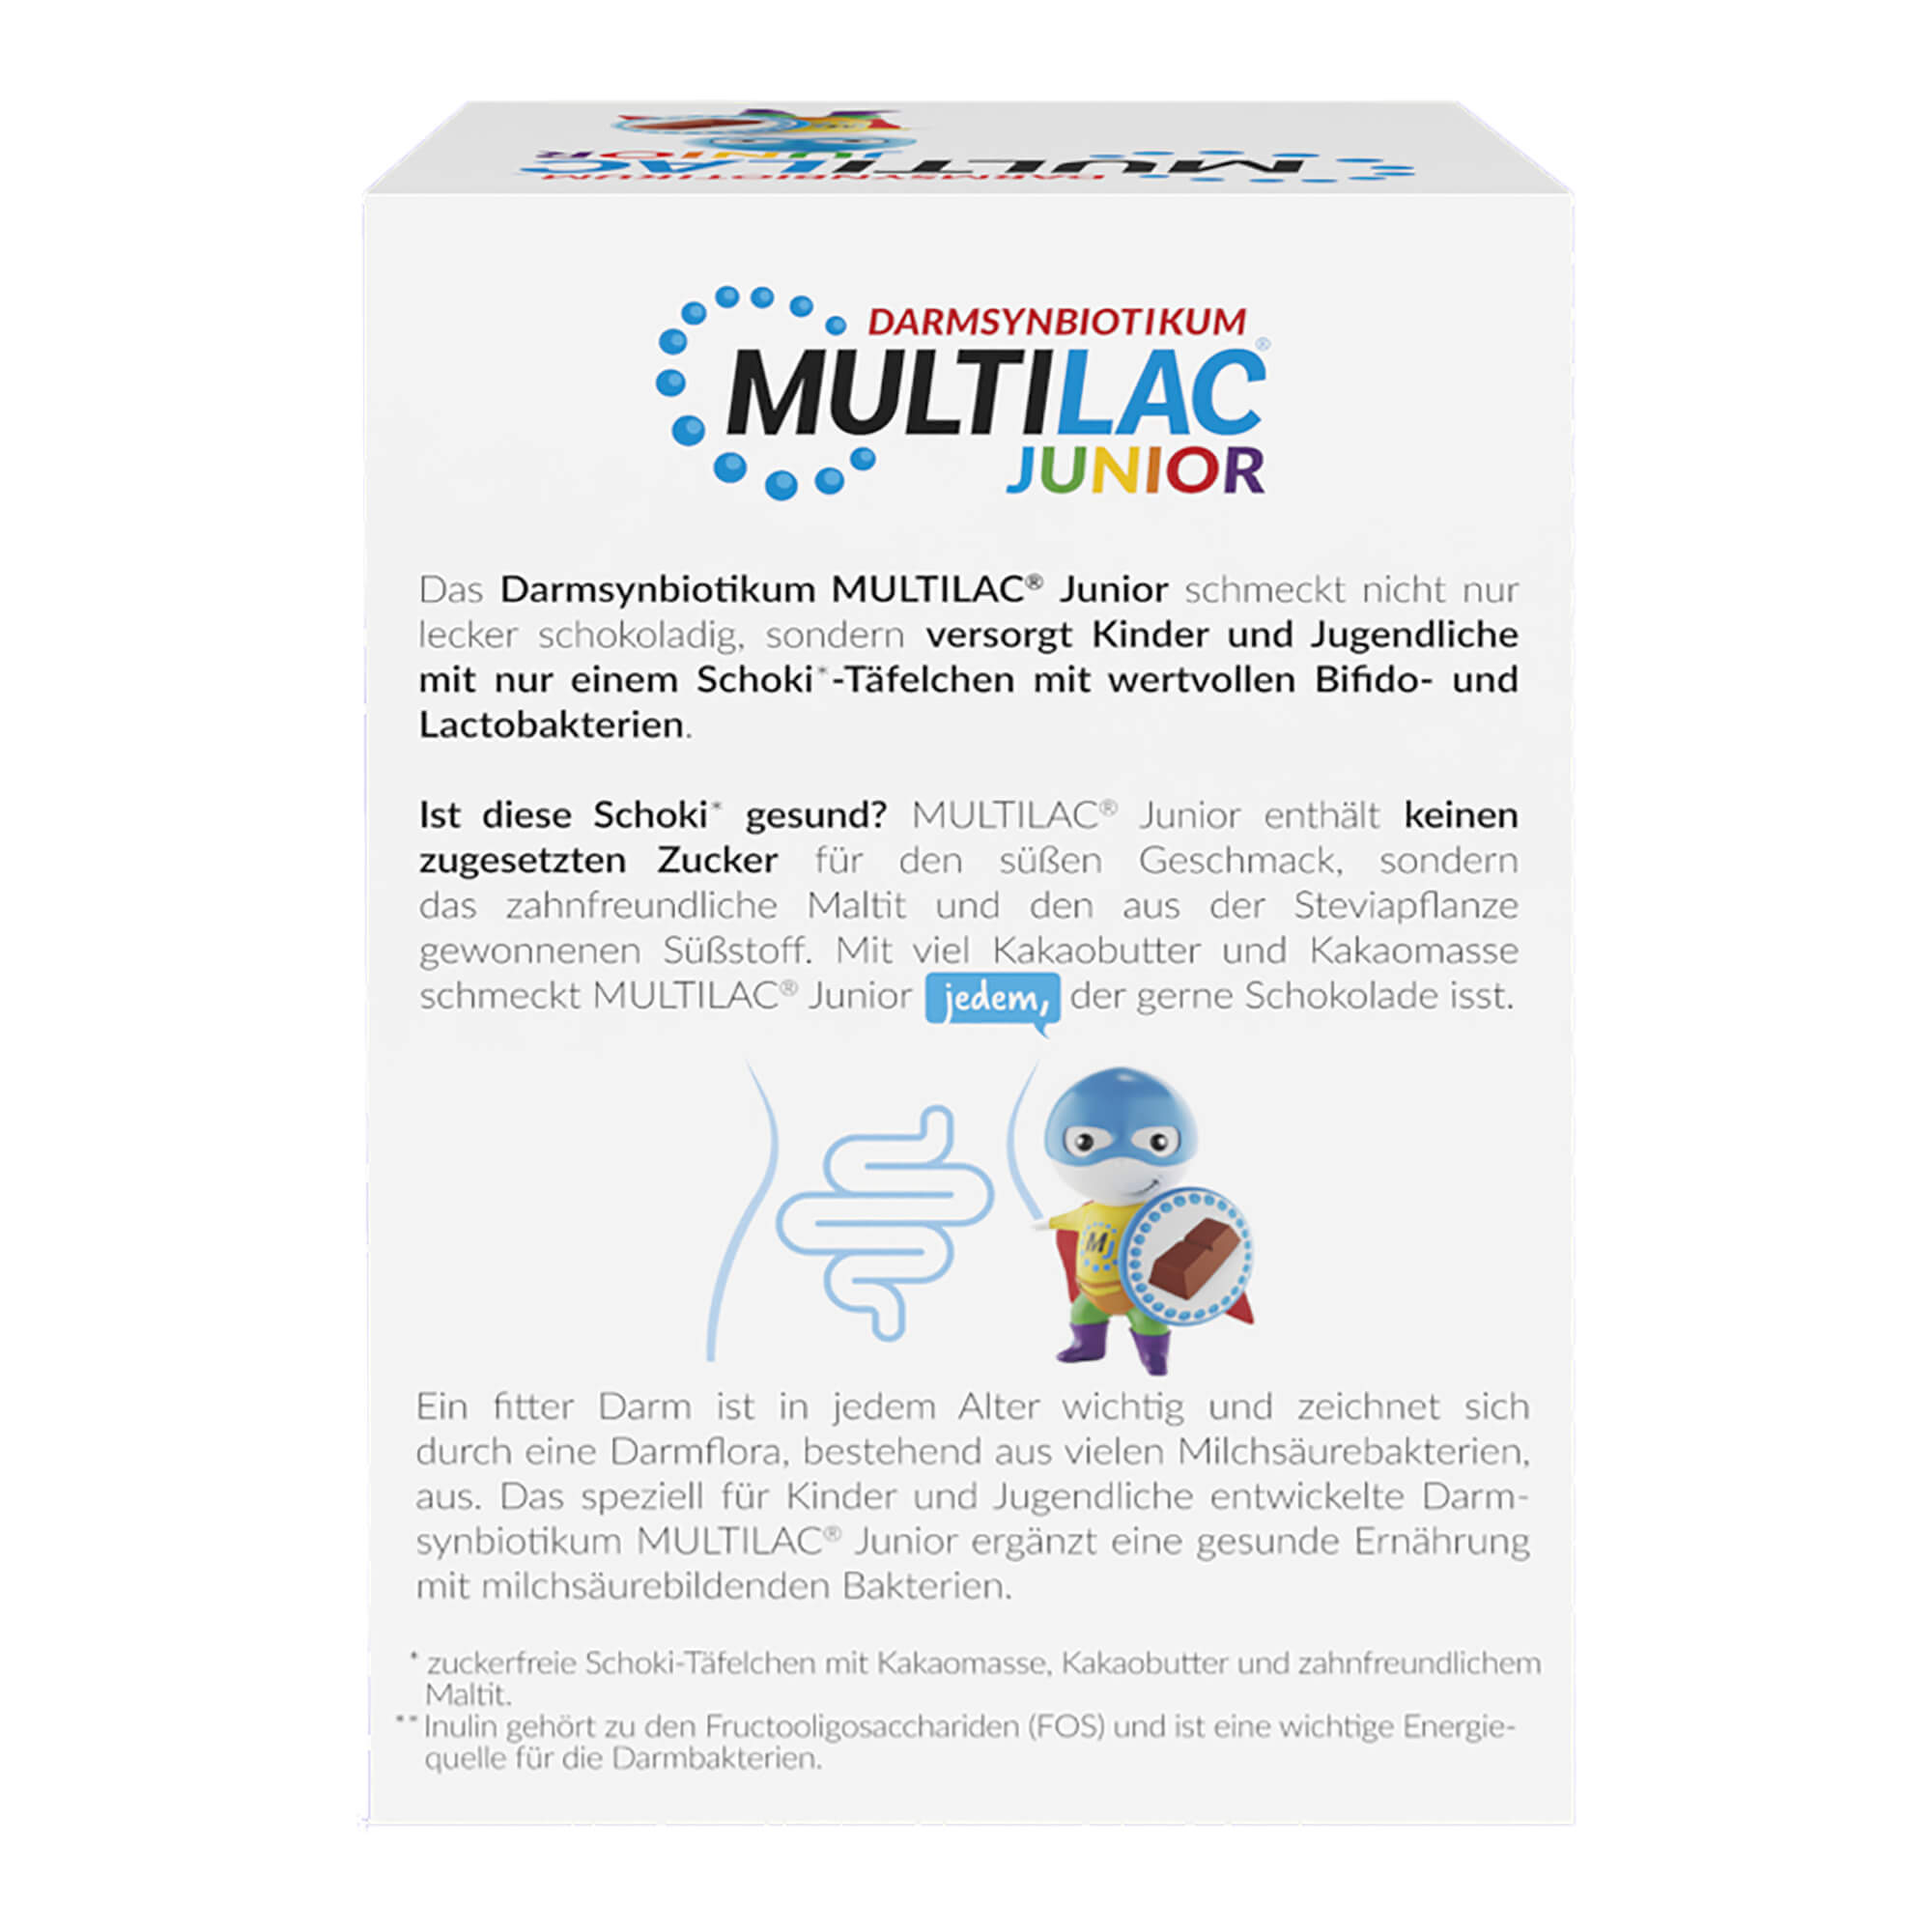 Multilac Junior Darmsynbiotikum Schokolade Packungsrückseite